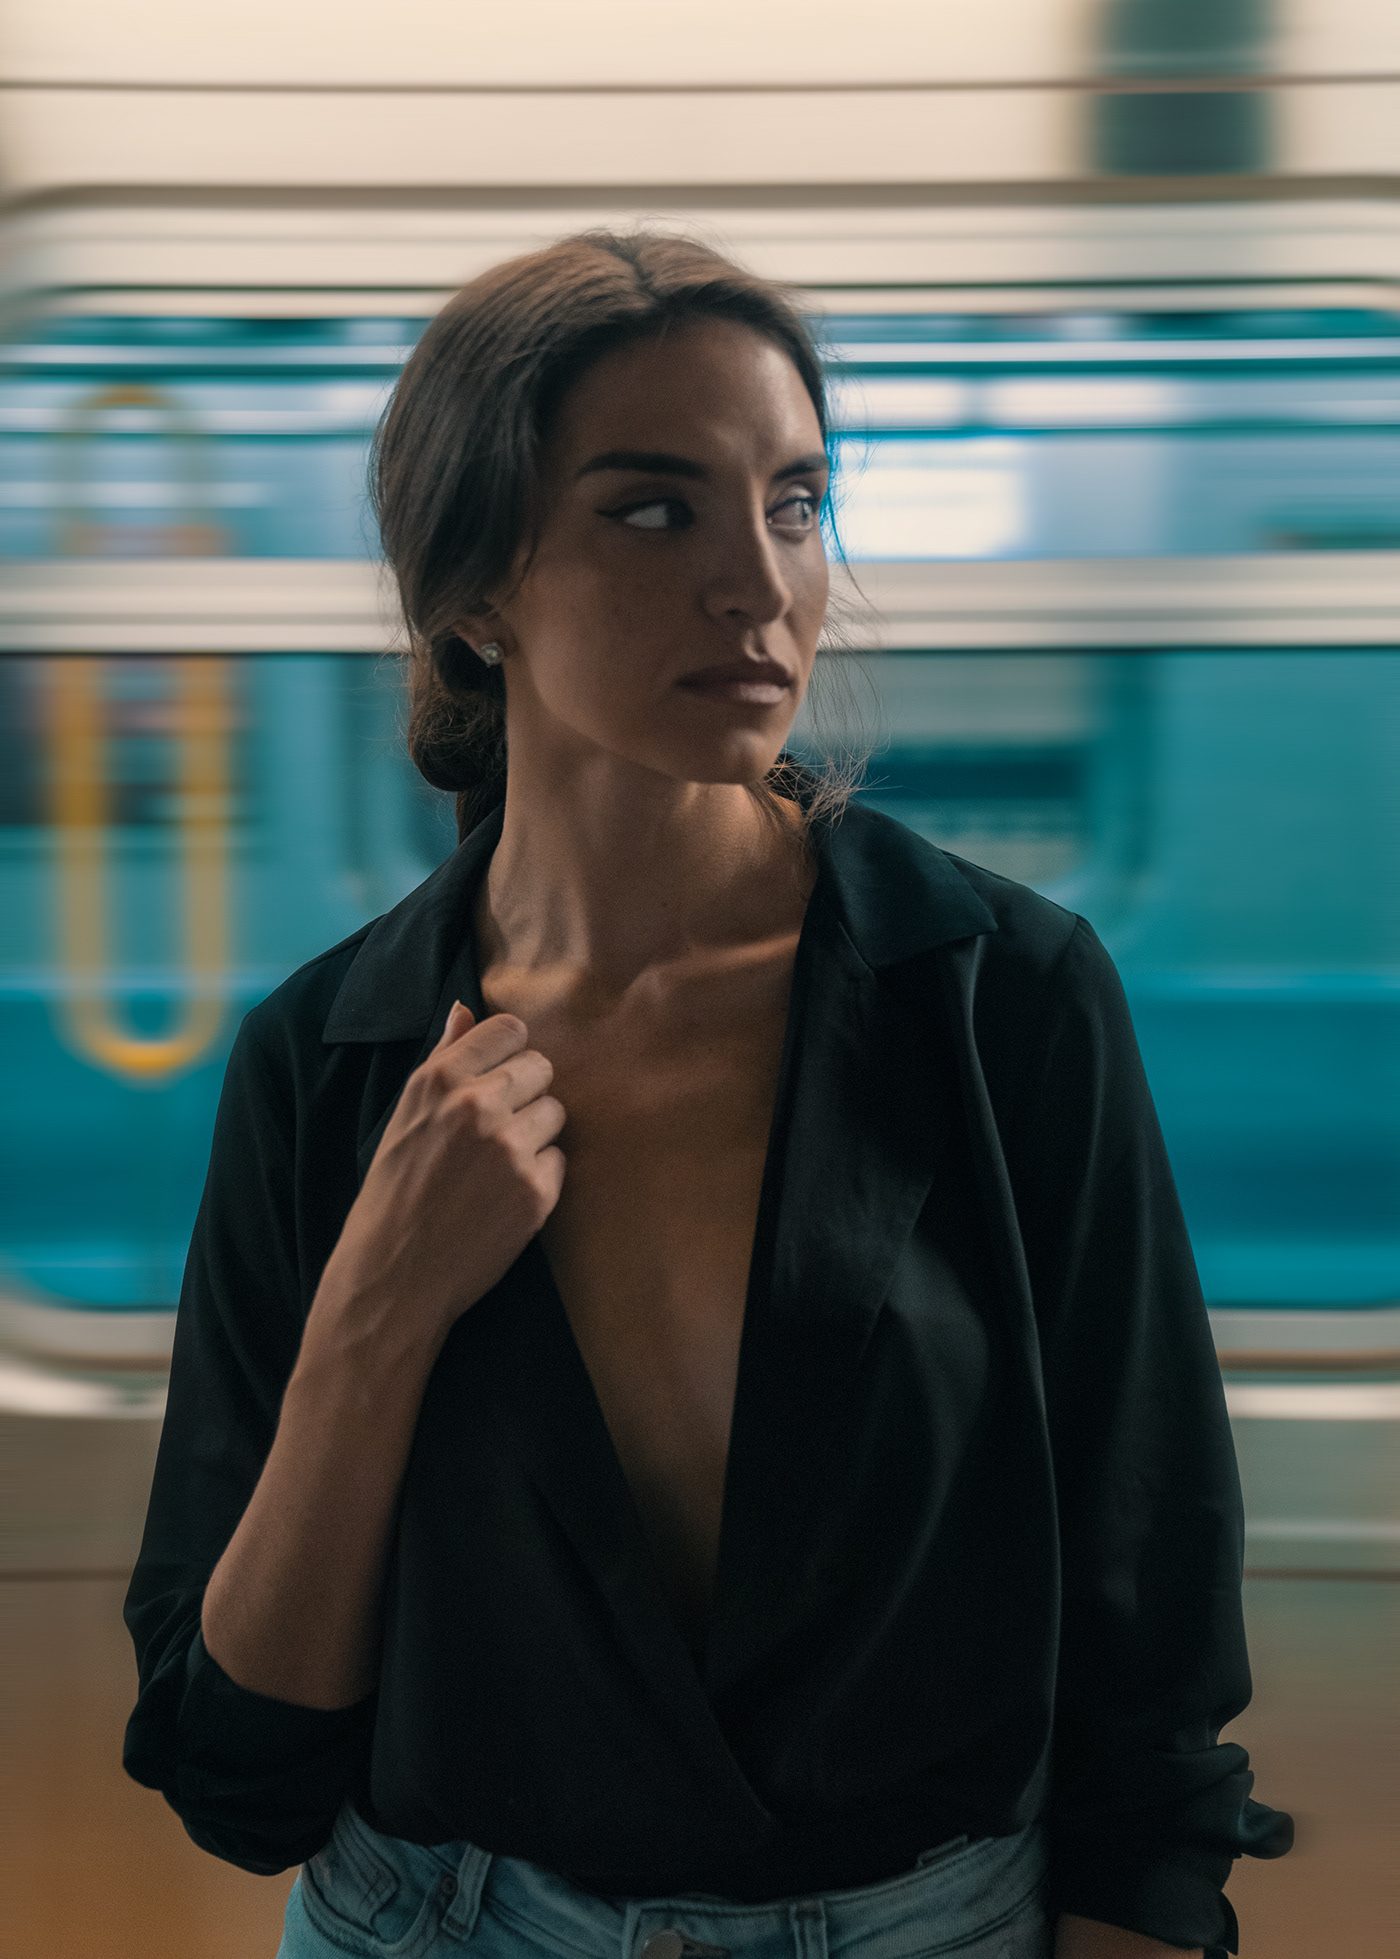 cinematic cinematic photography cinematic photoshoot new york subway Train photoshoot MODEL fashion